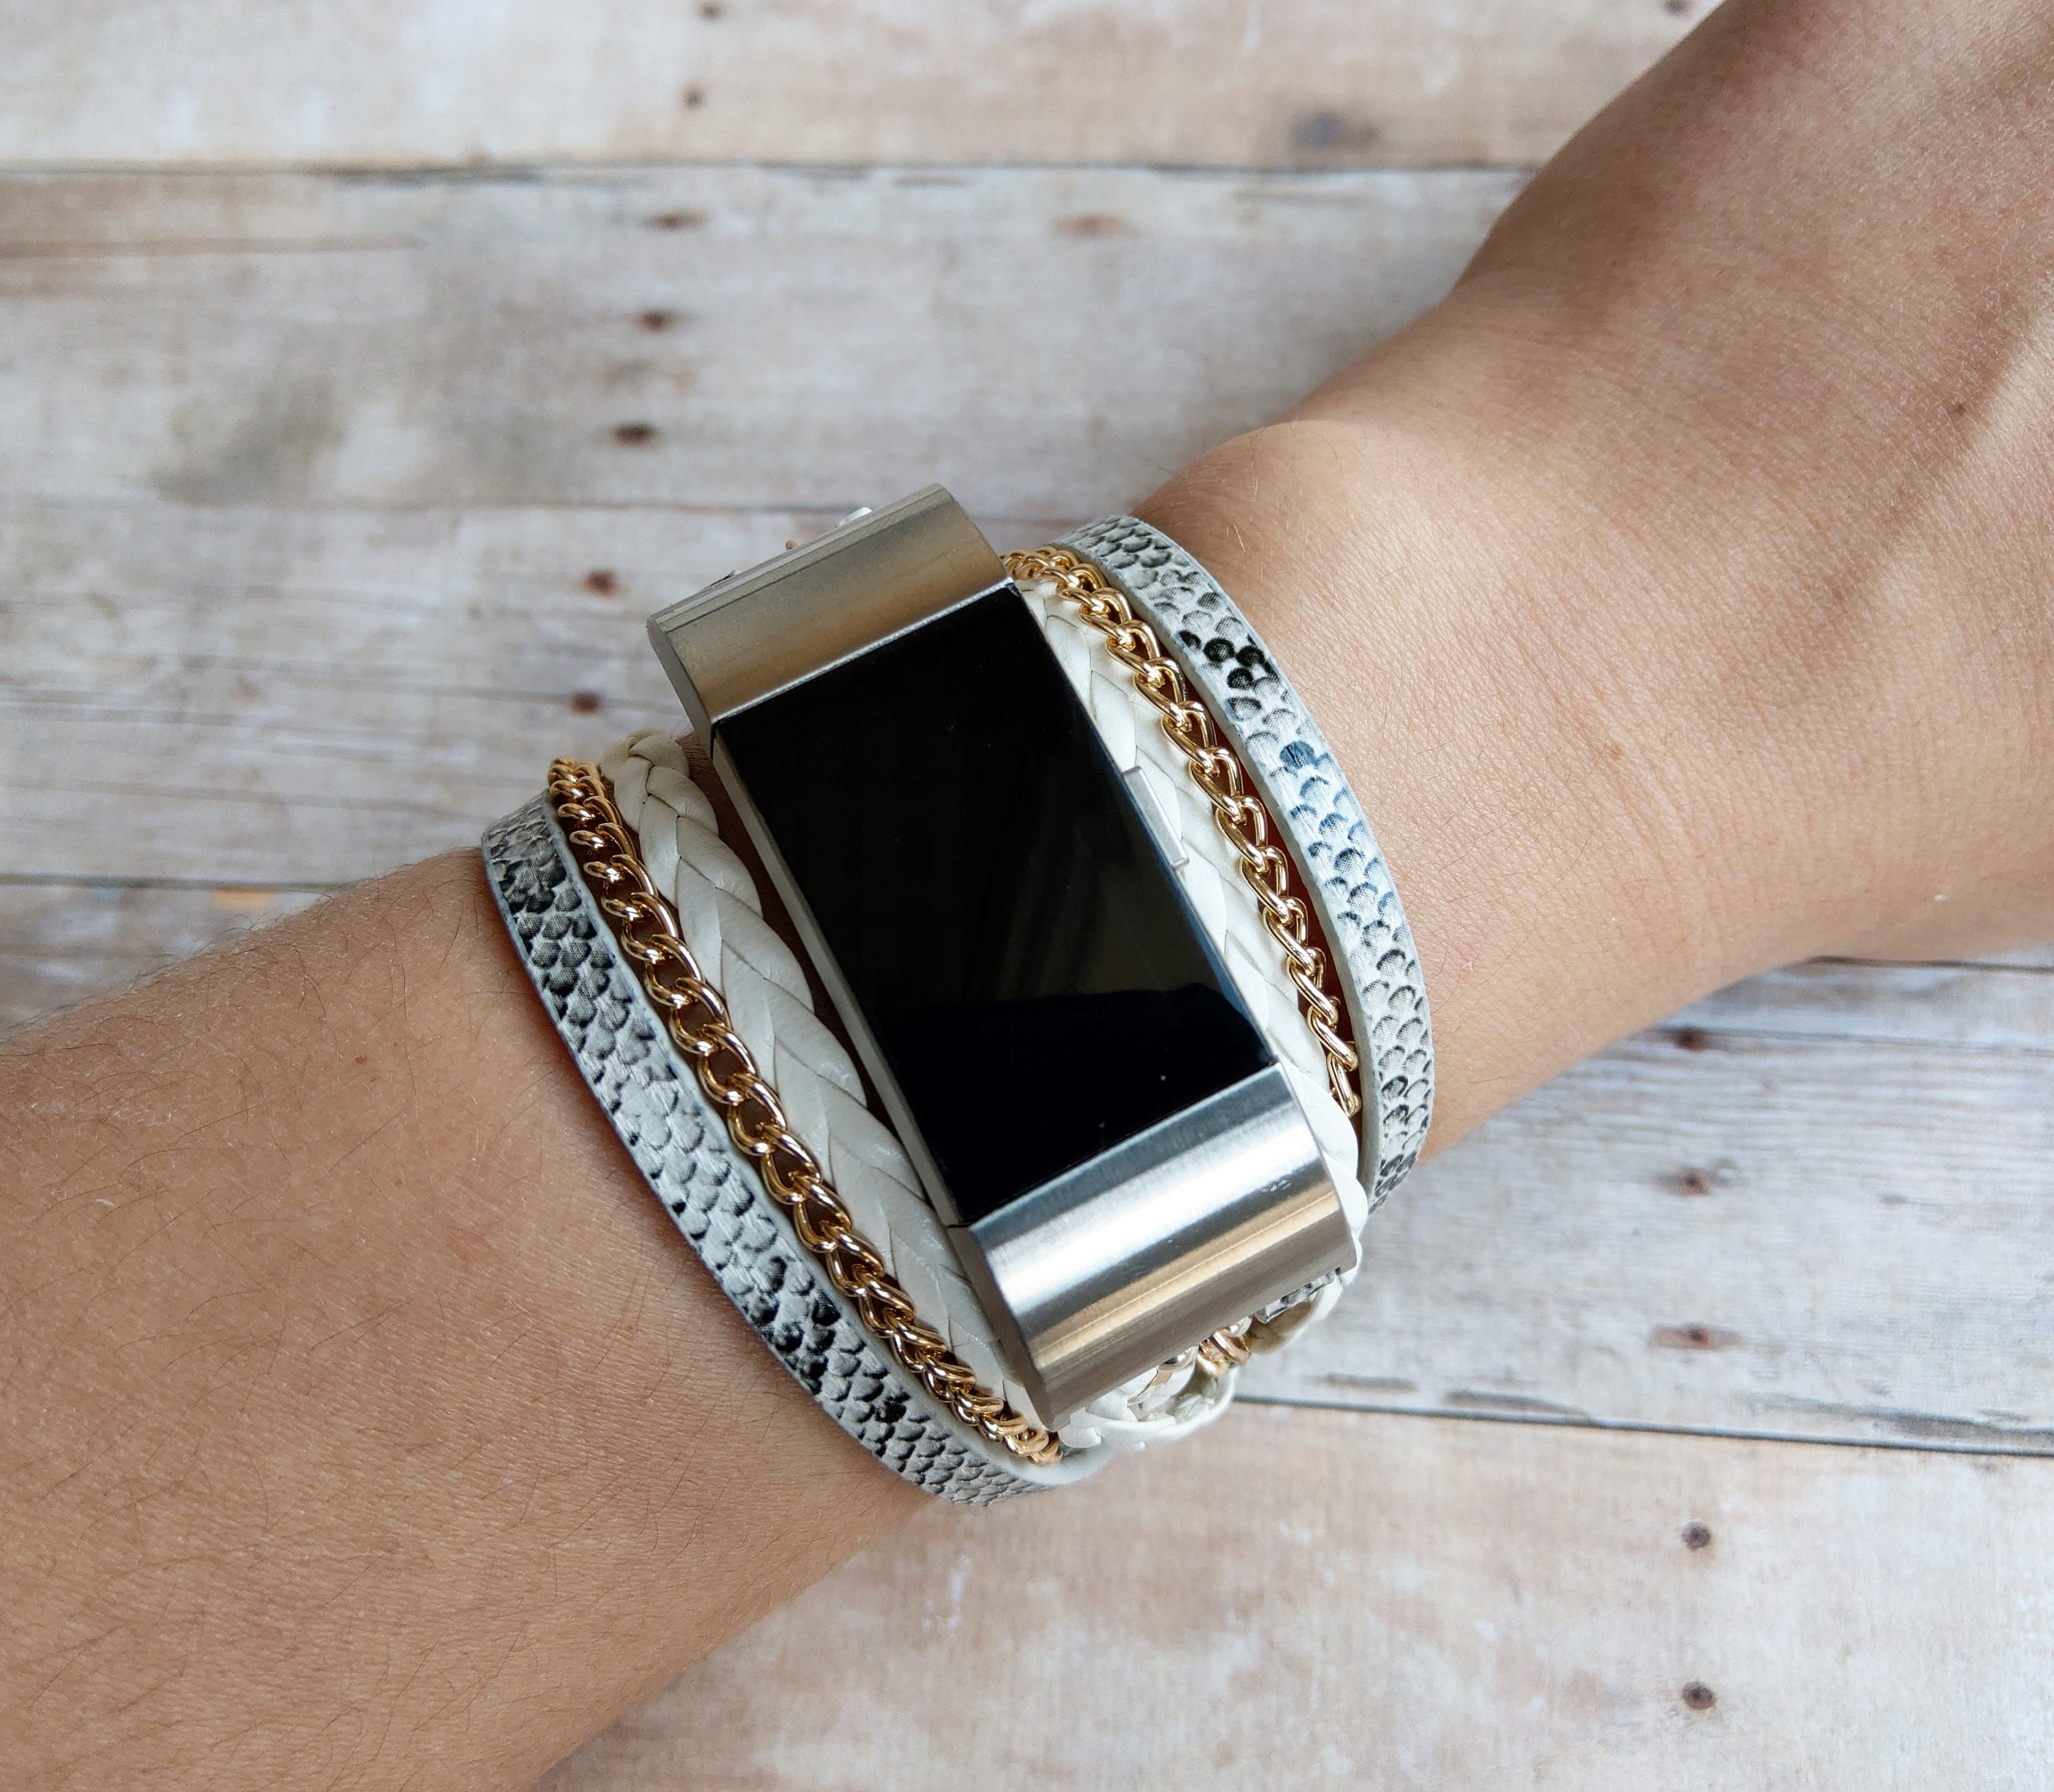 Metallarmband Ersatzband Uhrenarmband Watchband Für Fitbit Charge 2 